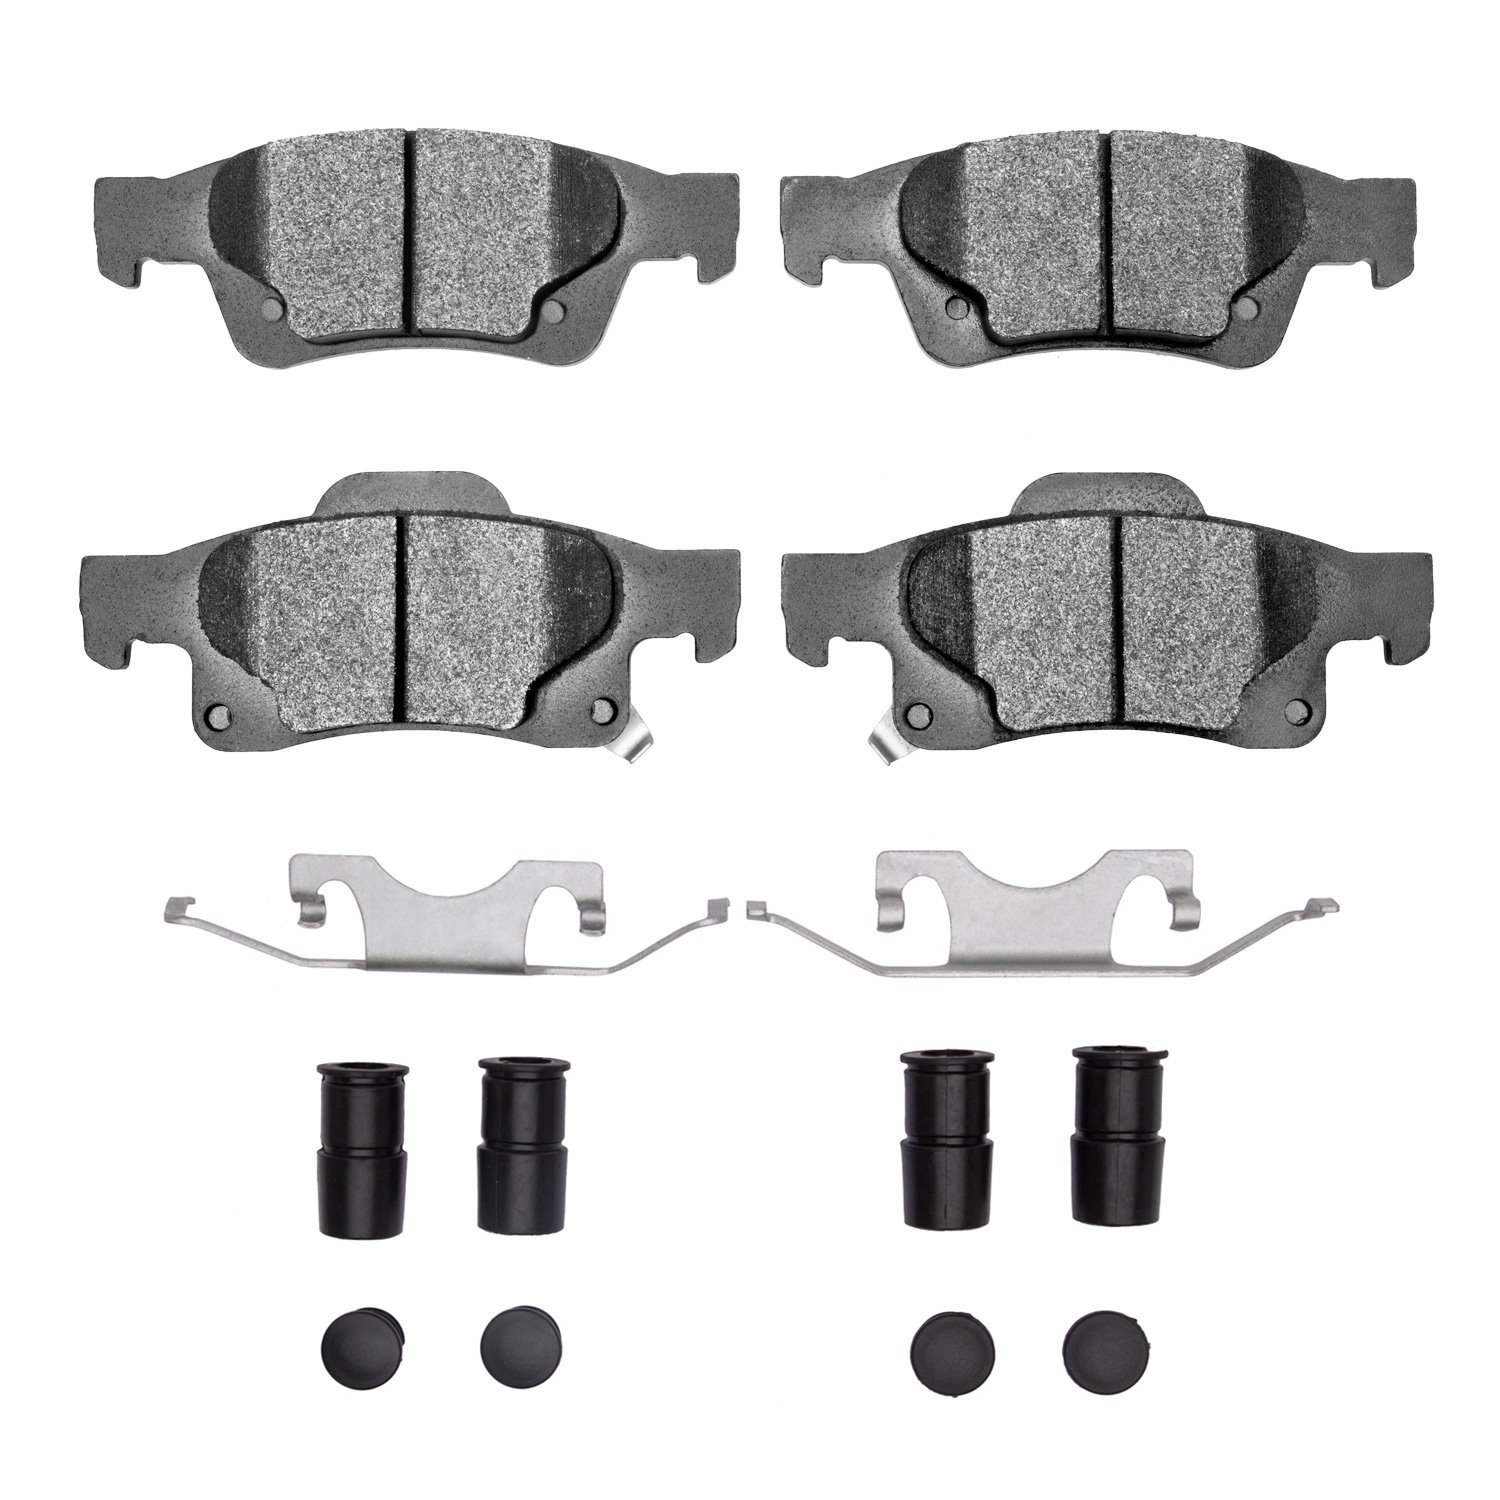 1311-1498-01 3000-Series Semi-Metallic Brake Pads & Hardware Kit, Fits Select Mopar, Position: Rear